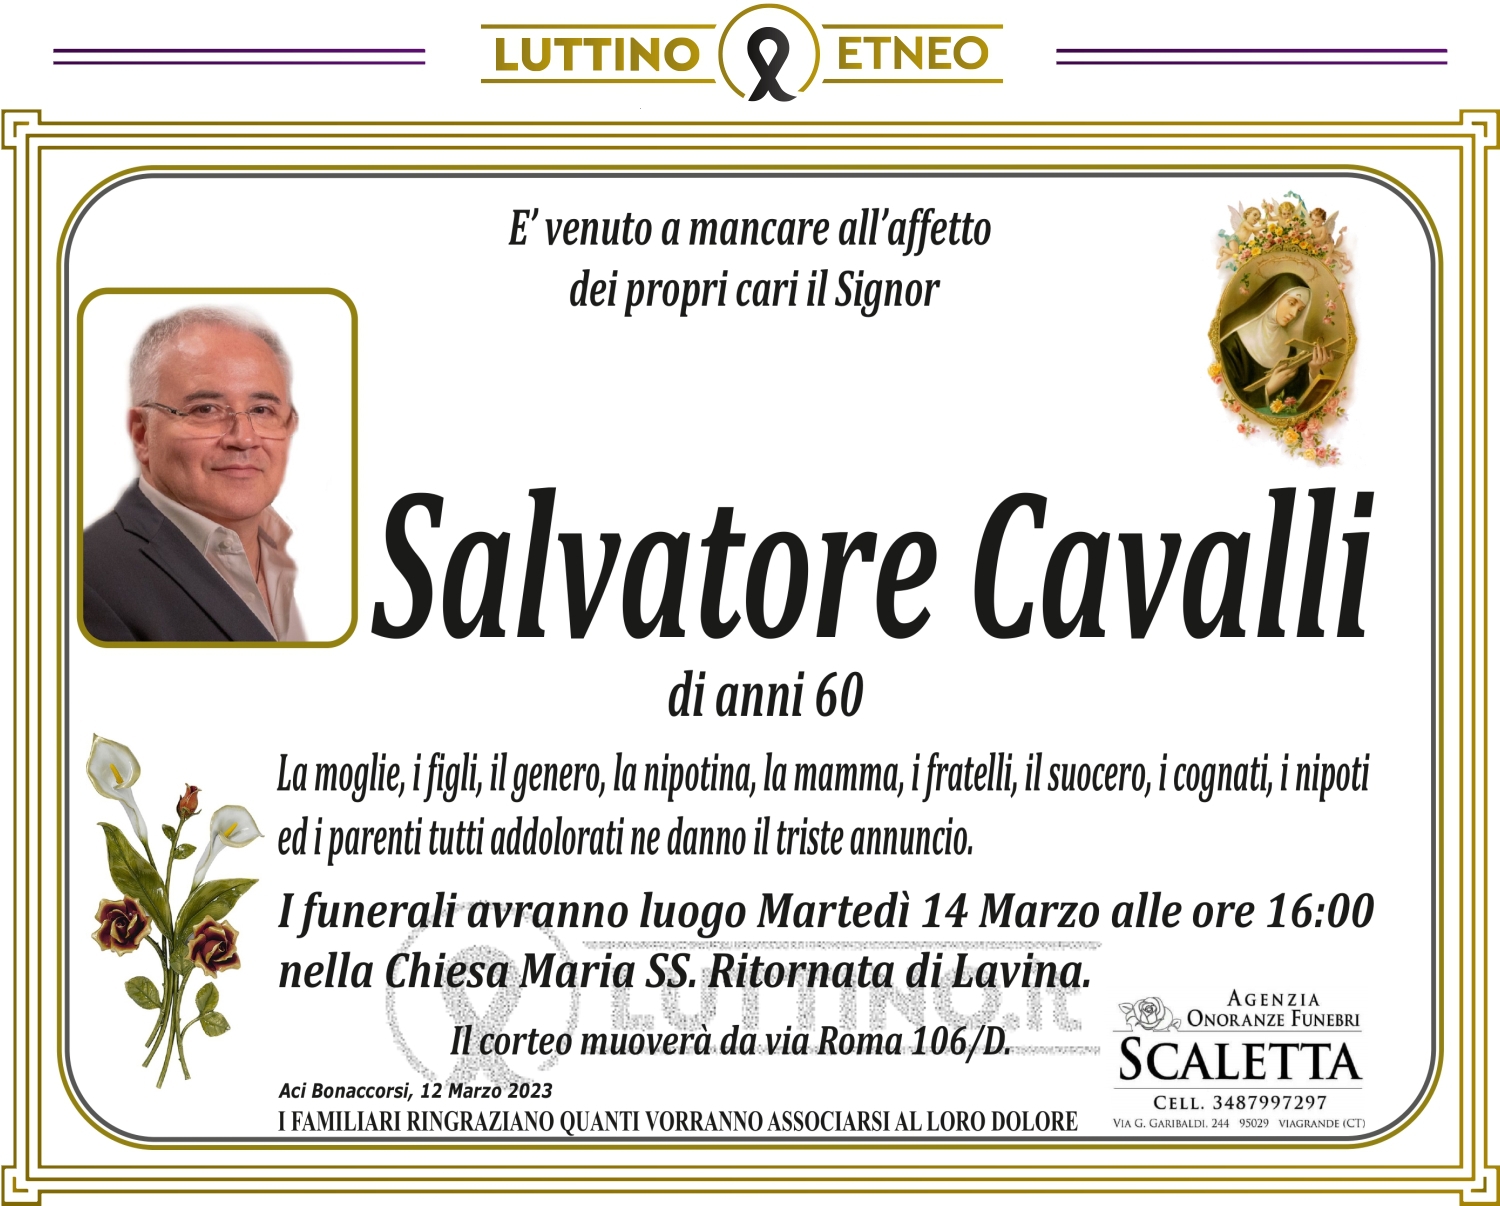 Salvatore Cavalli